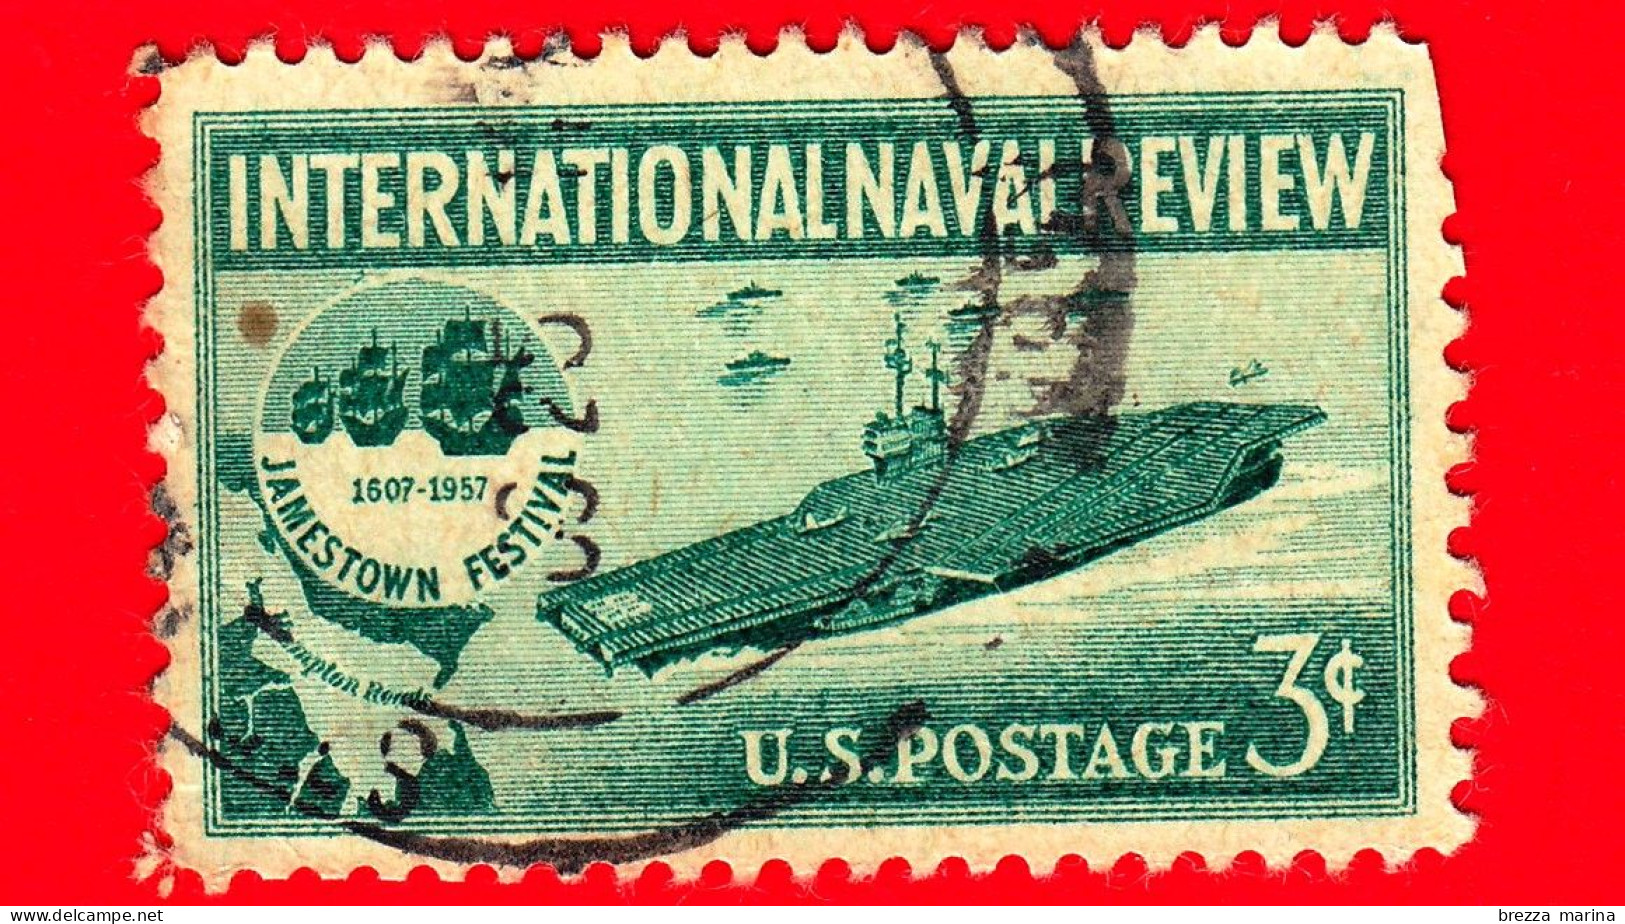 USA - STATI UNITI - Usato - 1957 - Rassegna Navale Internazionale - Portaerei Ed Emblema Del Jamestown Festival - 3 - Gebraucht